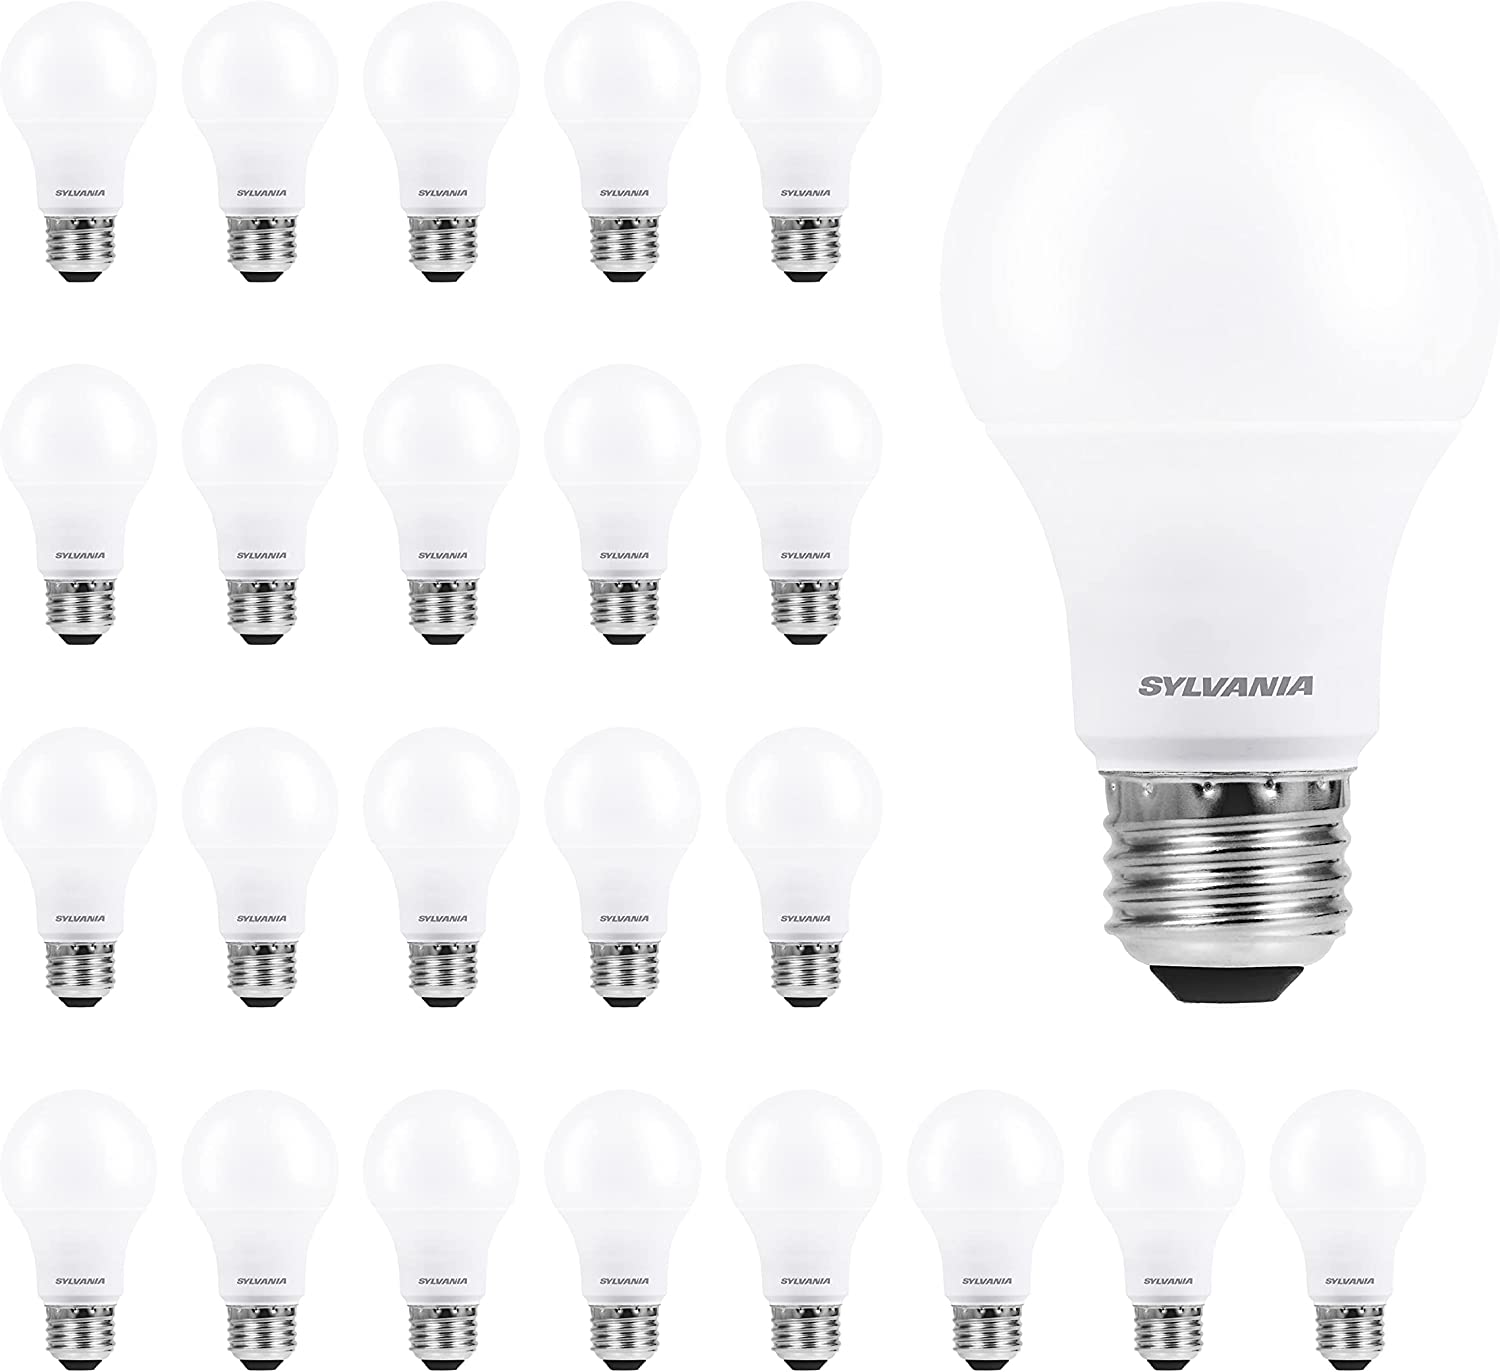 led light bulb for home detailed review